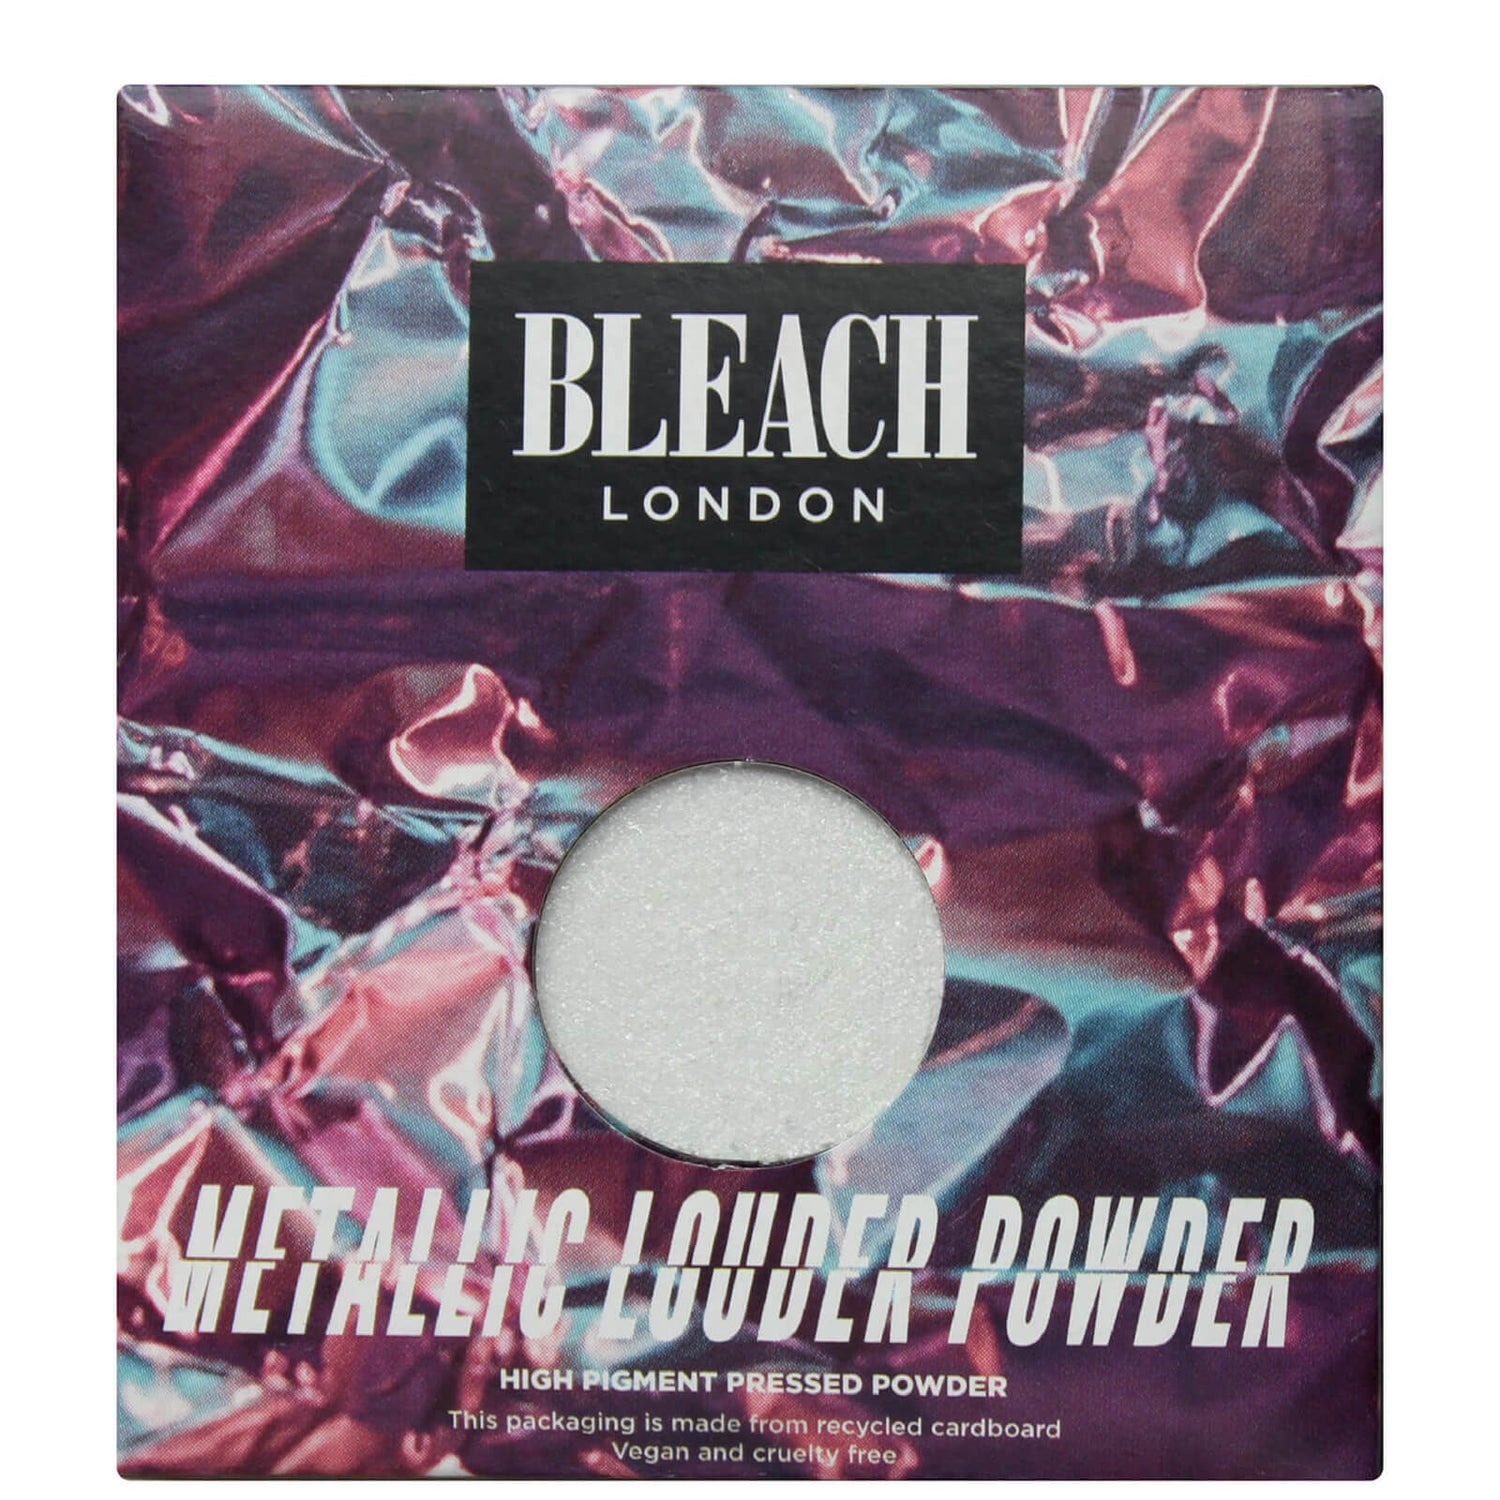 BLEACH LONDON Metallic Louder Powder P1 Me(블리치 런던 메탈릭 라우더 파우더 P1 Me)